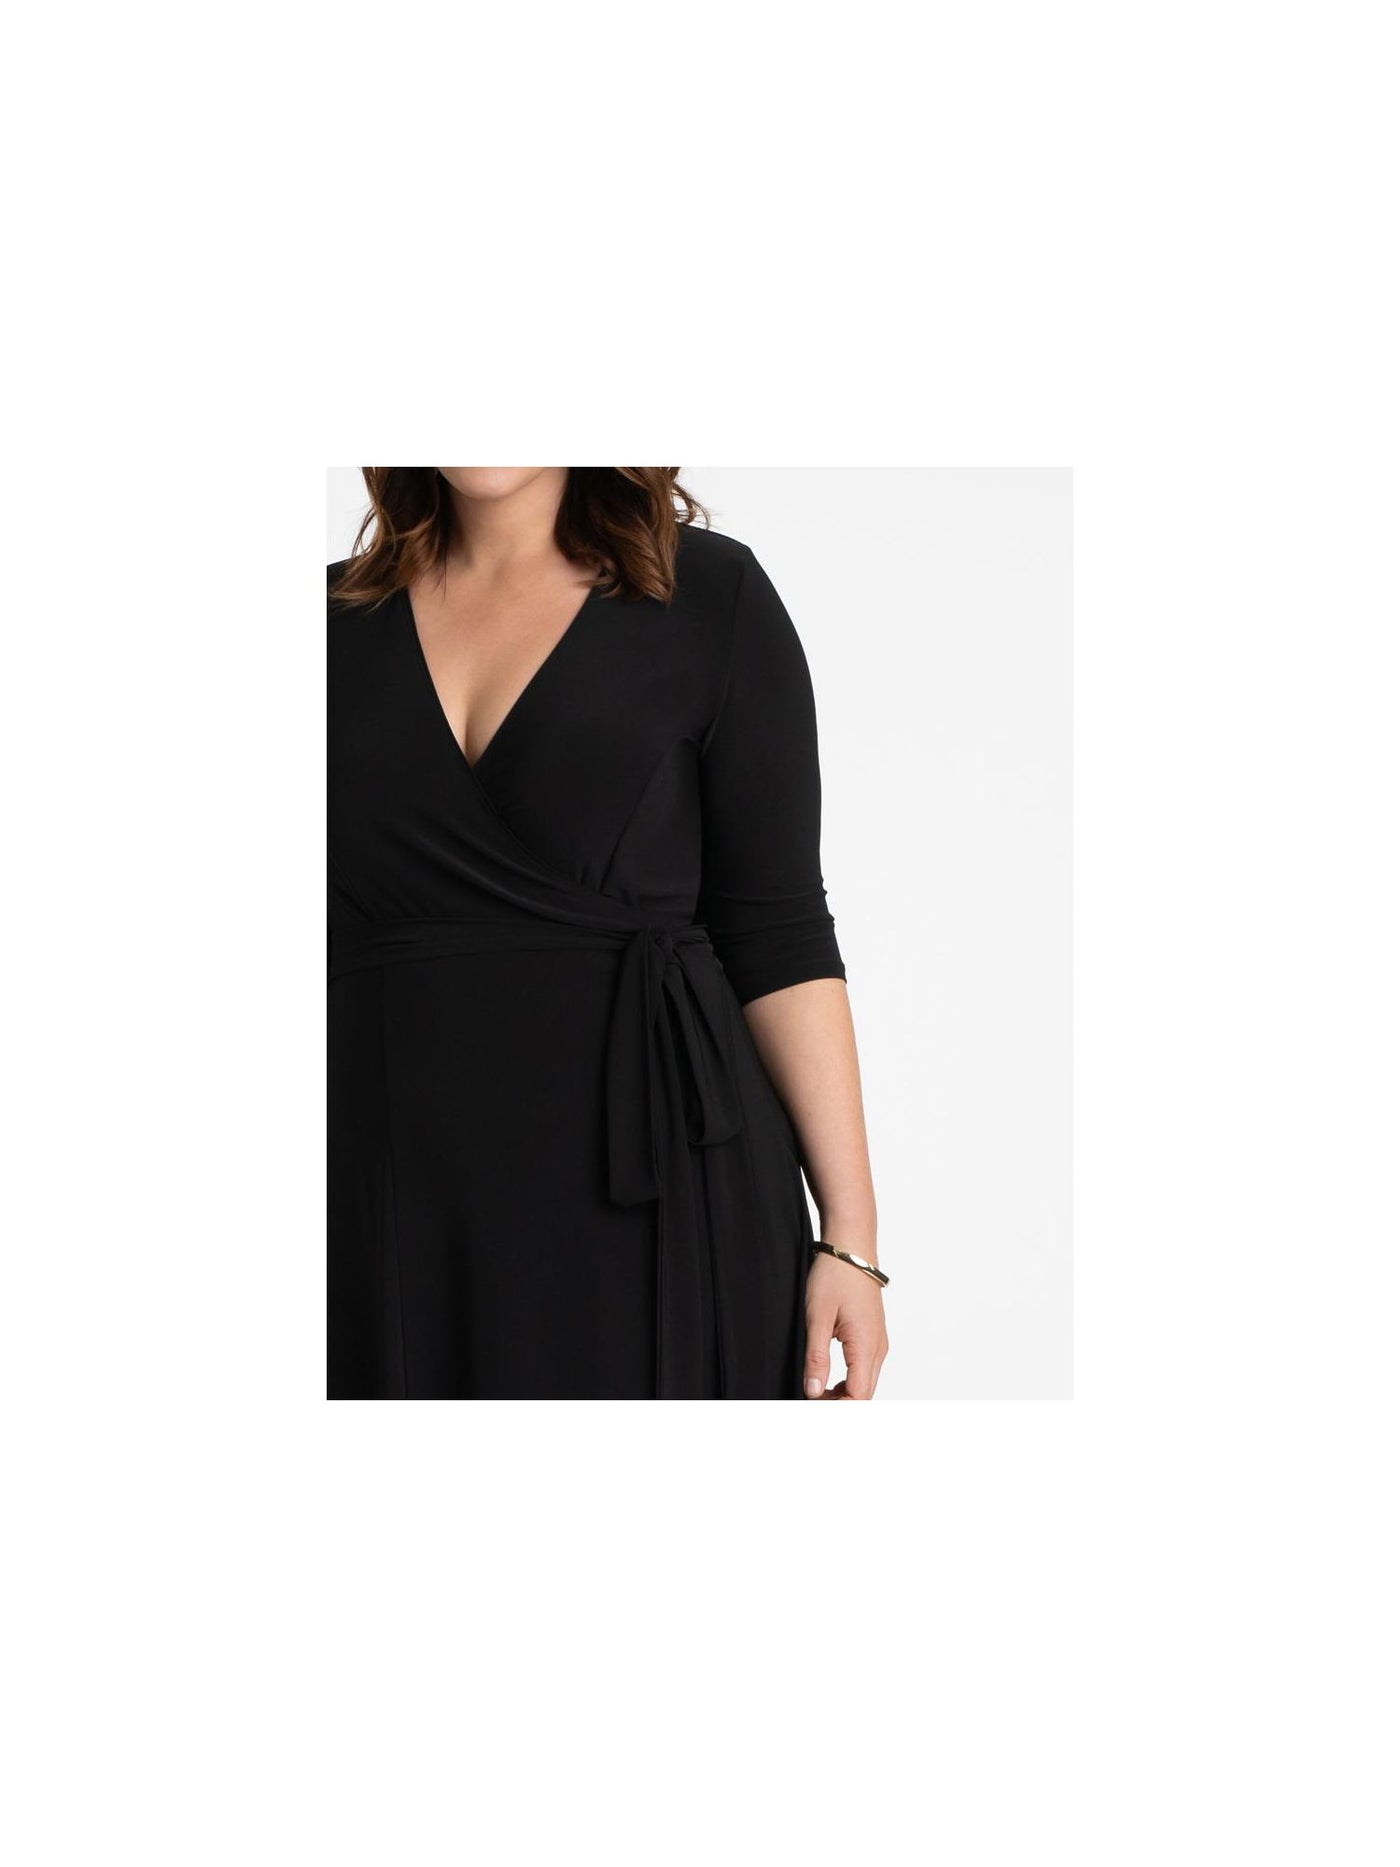 KIYONNA Womens Black Tie 3/4 Sleeve Surplice Neckline Knee Length Wear To Work Wrap Dress Plus 1X